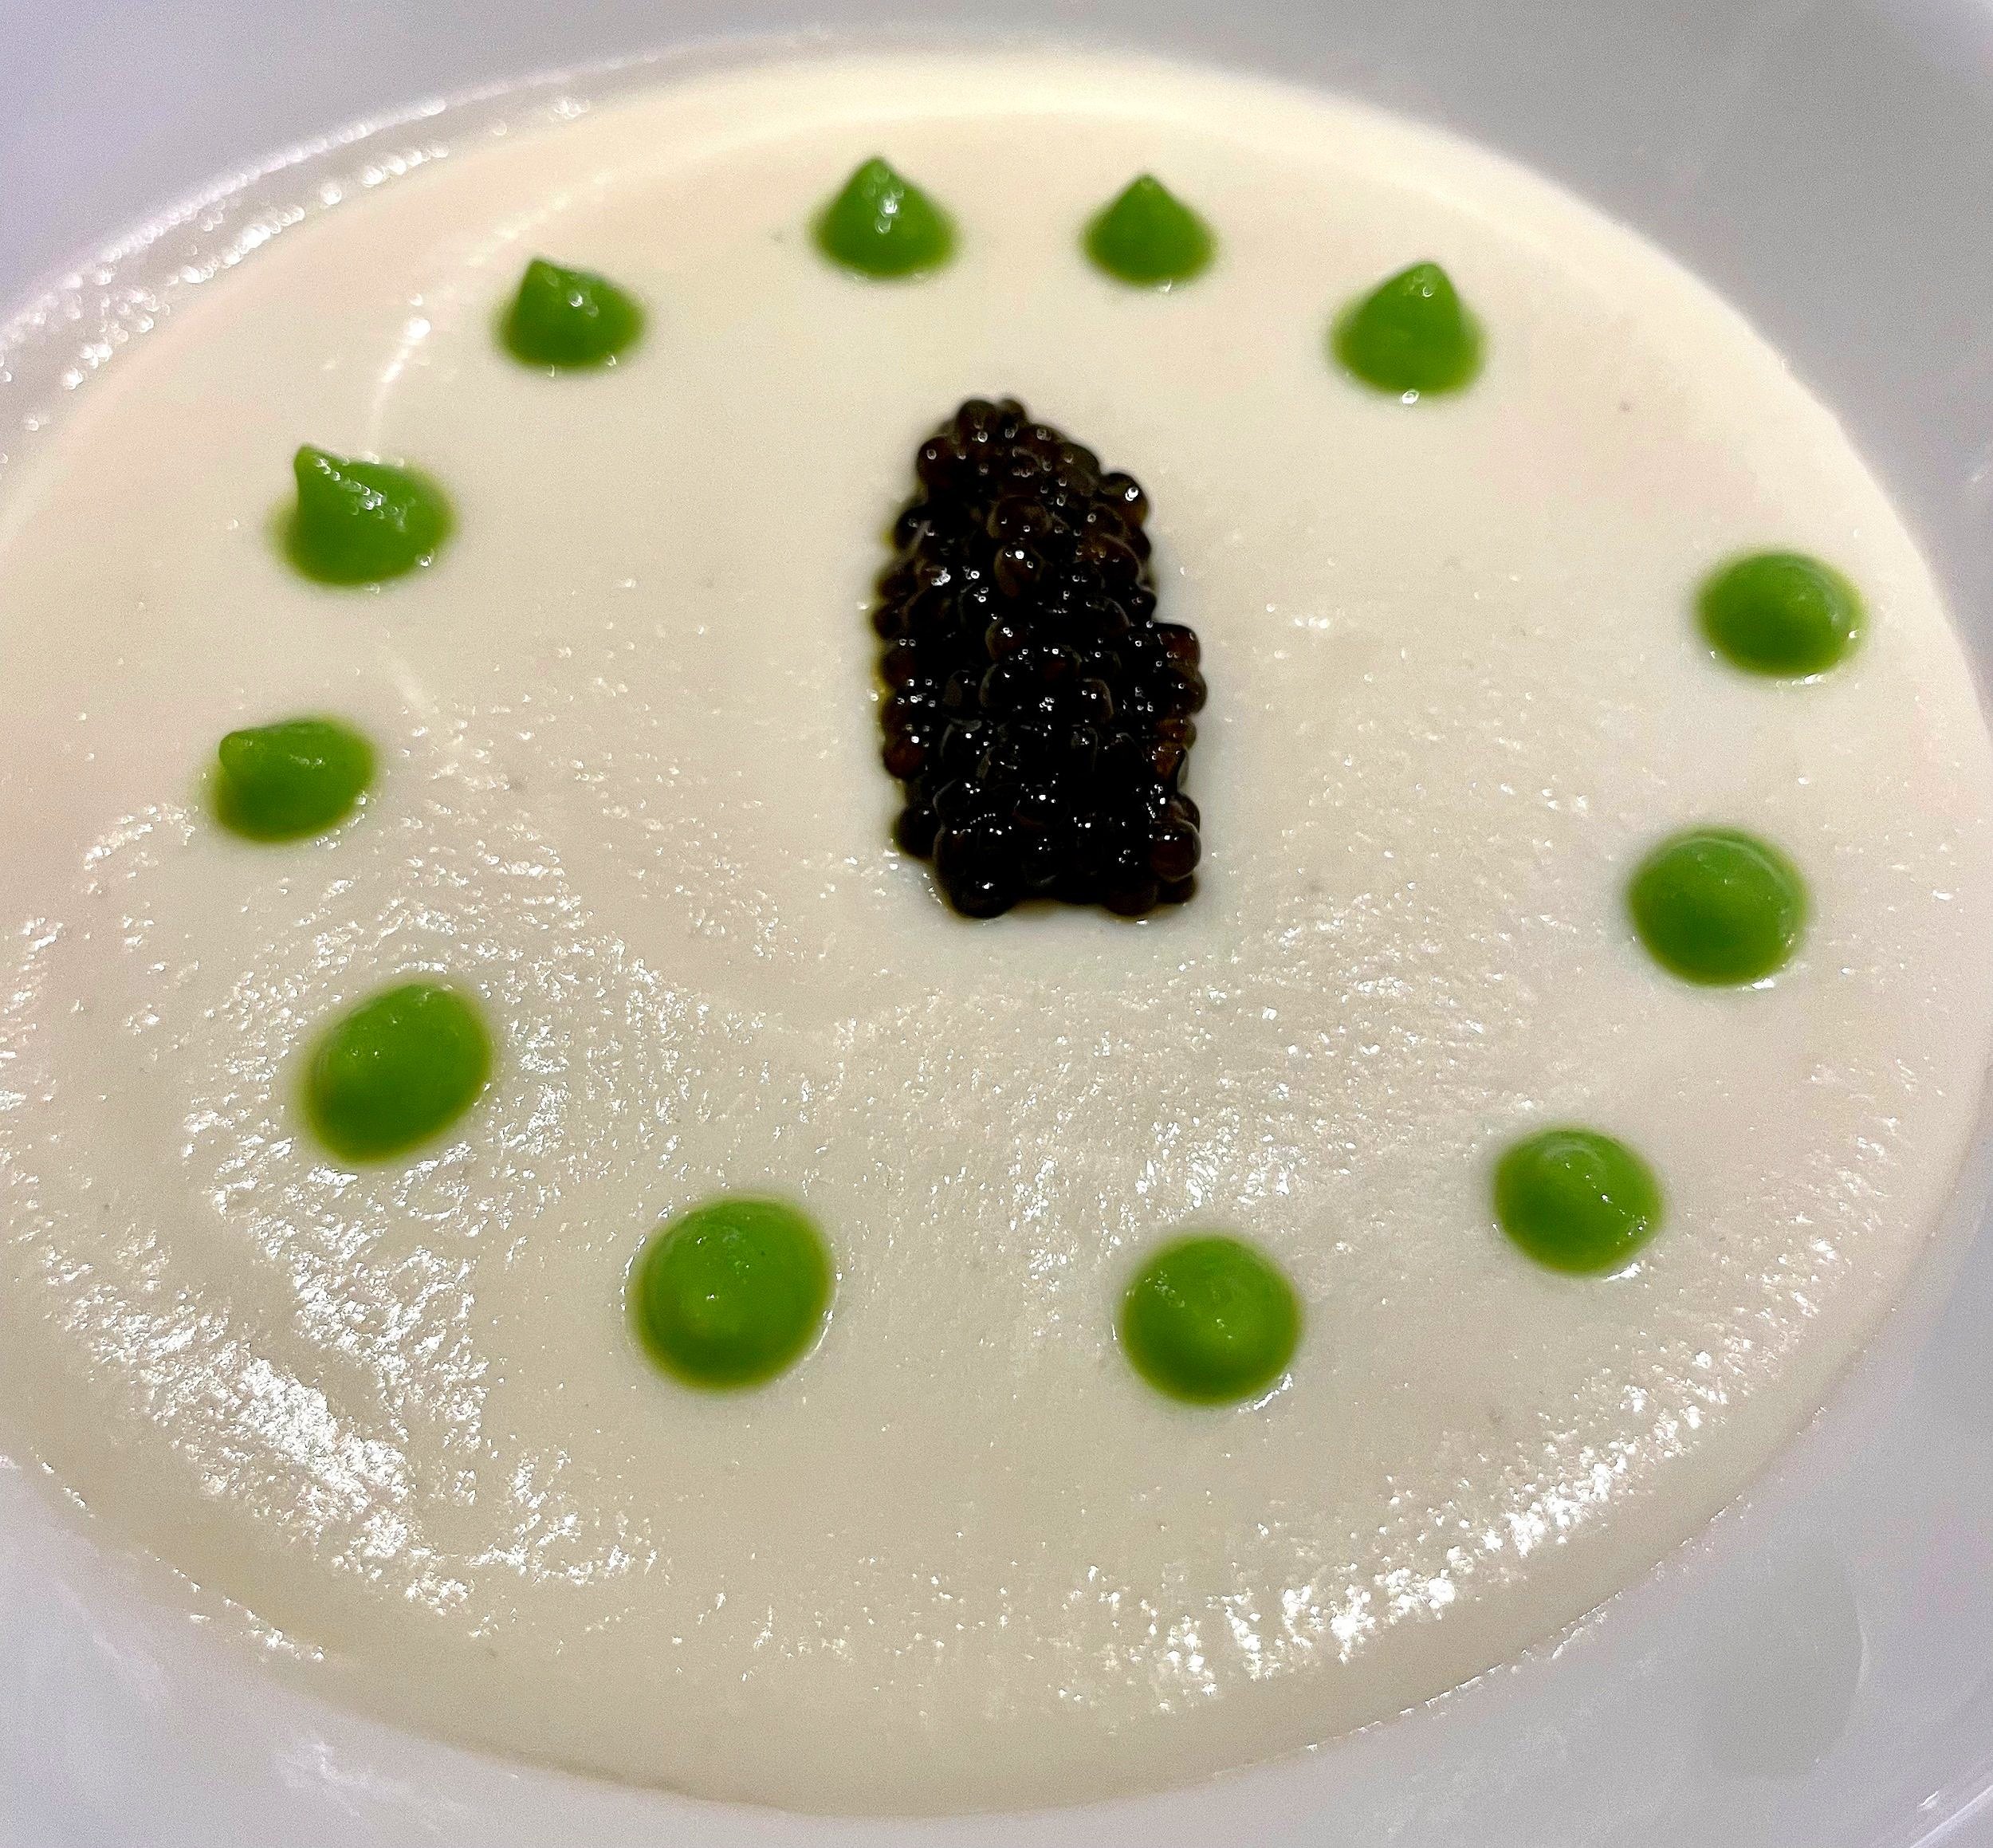  The Amuse Bouche - Breton cauliflower cream with mashed green peas and caviar 